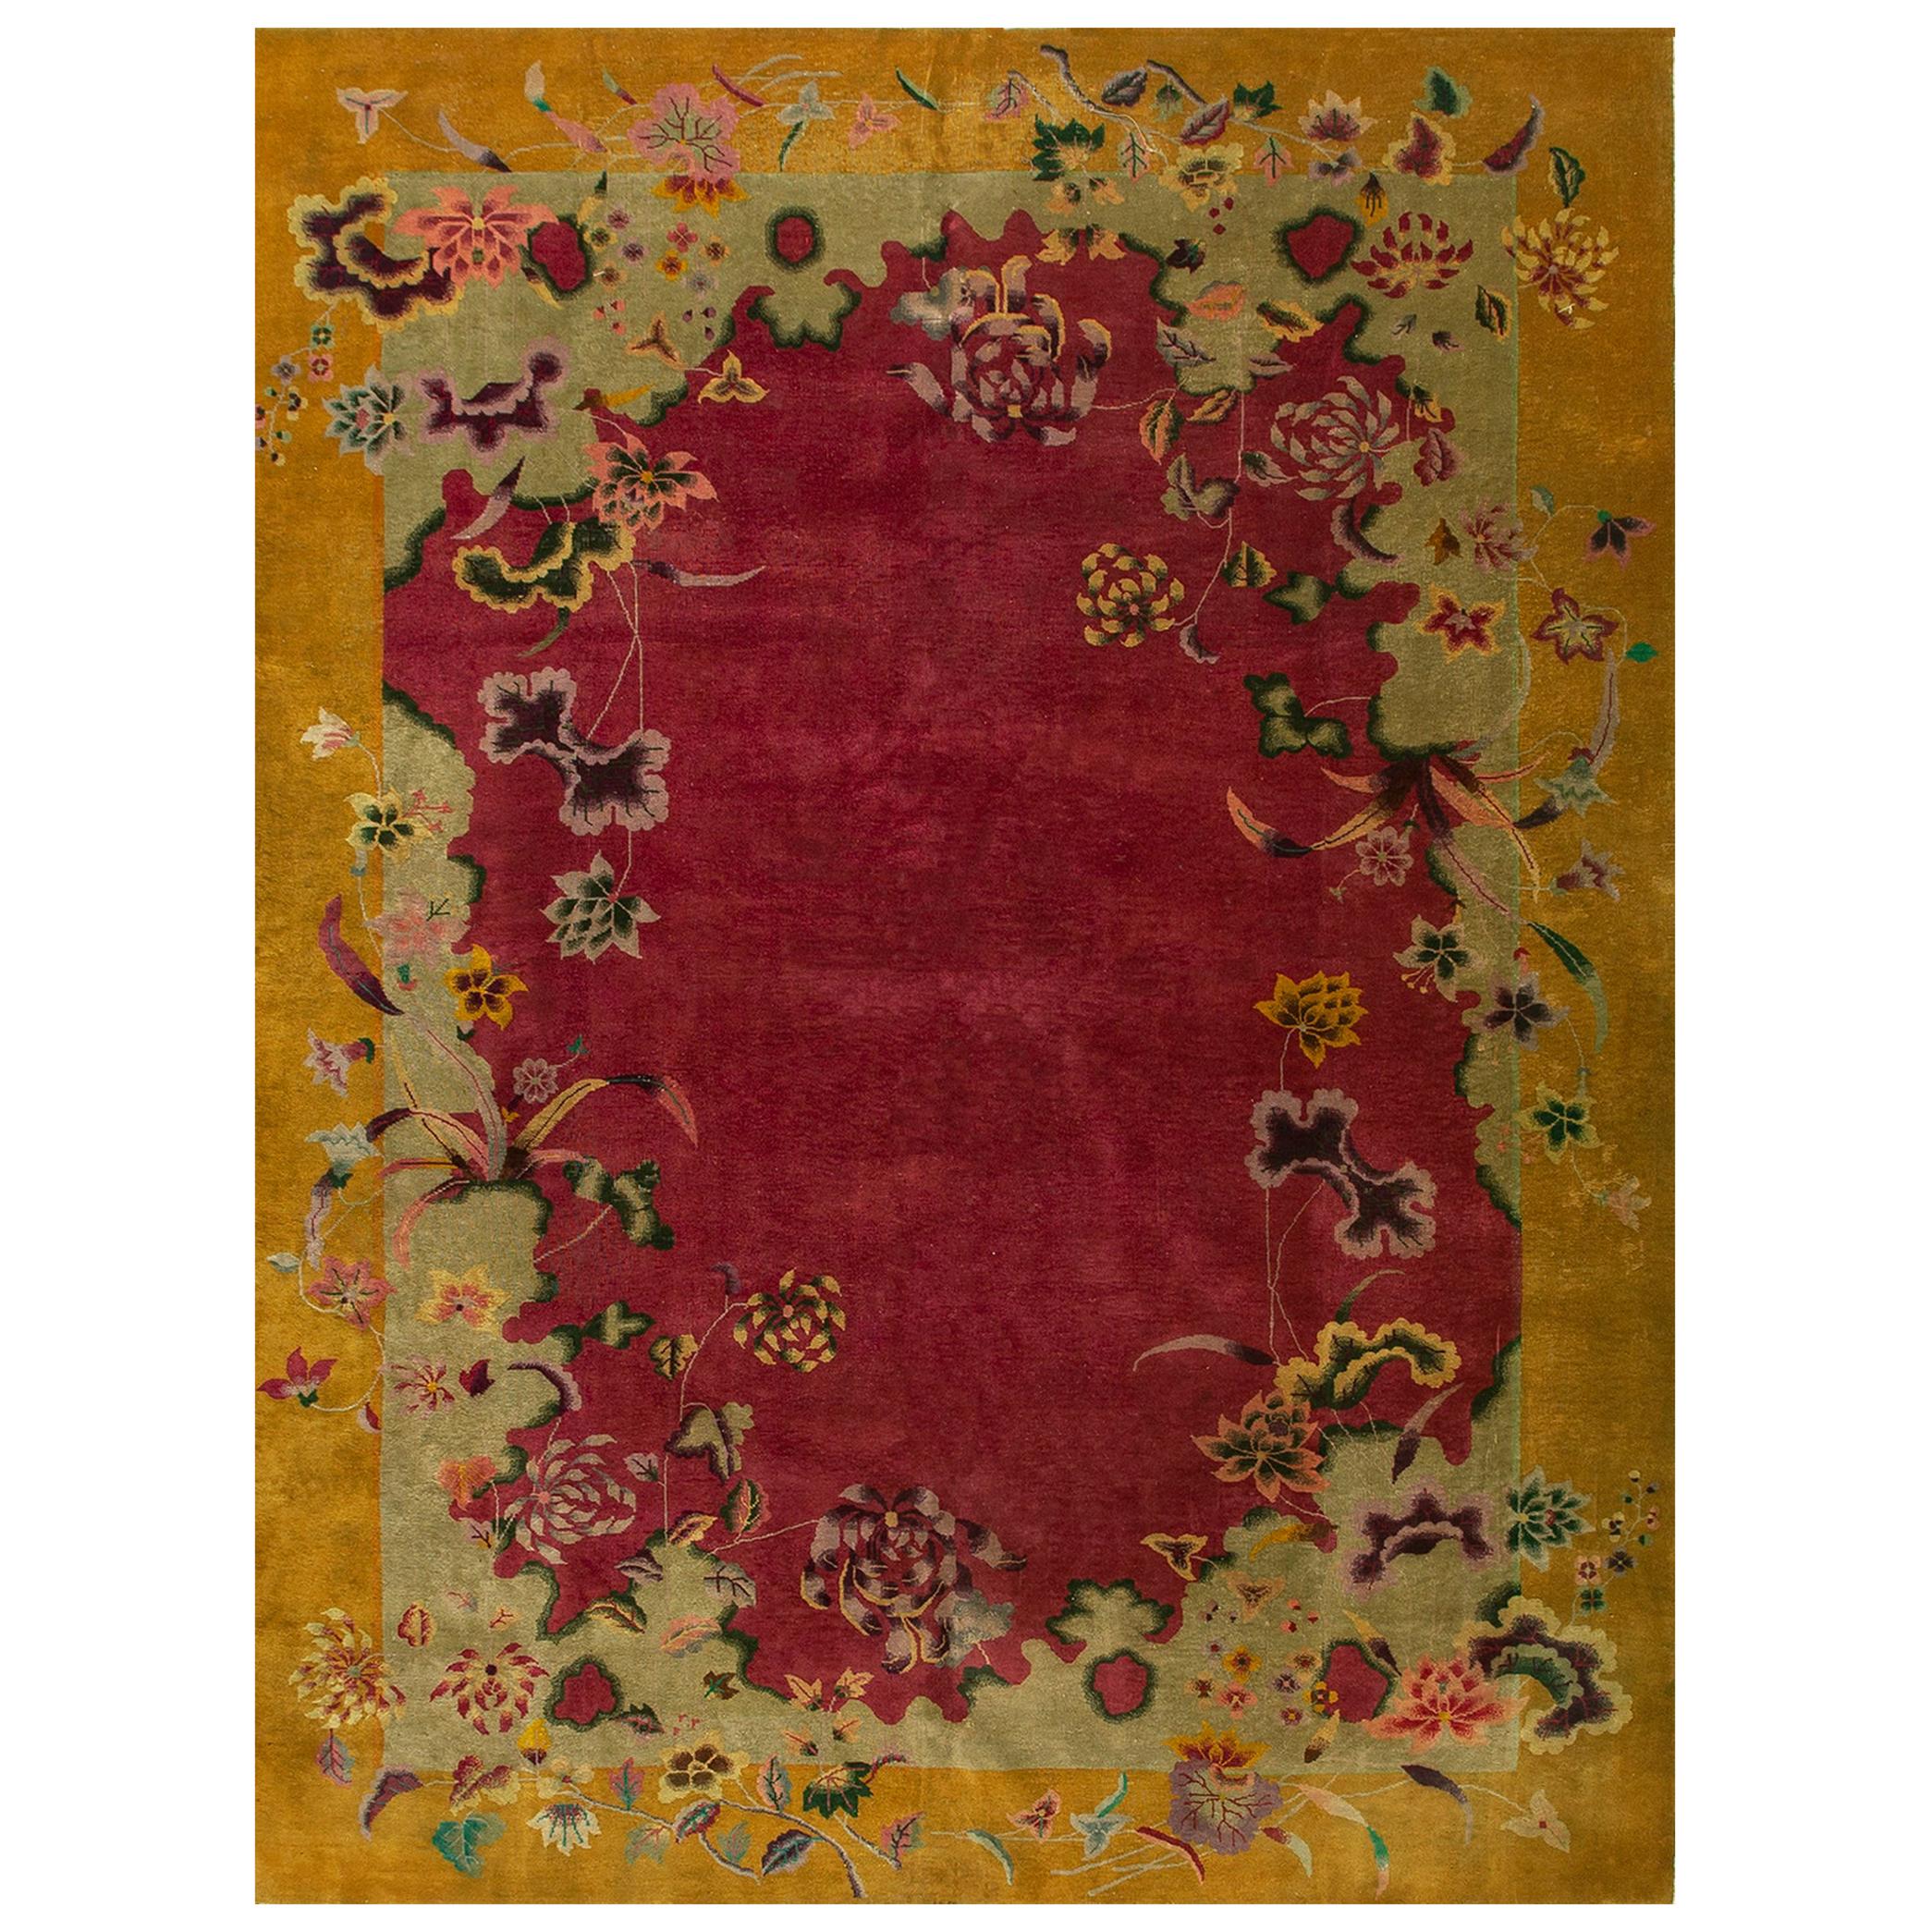 1920s Chinese Art Deco Carpet ( 8'9" x 11'1" - 266 x 337 cm )